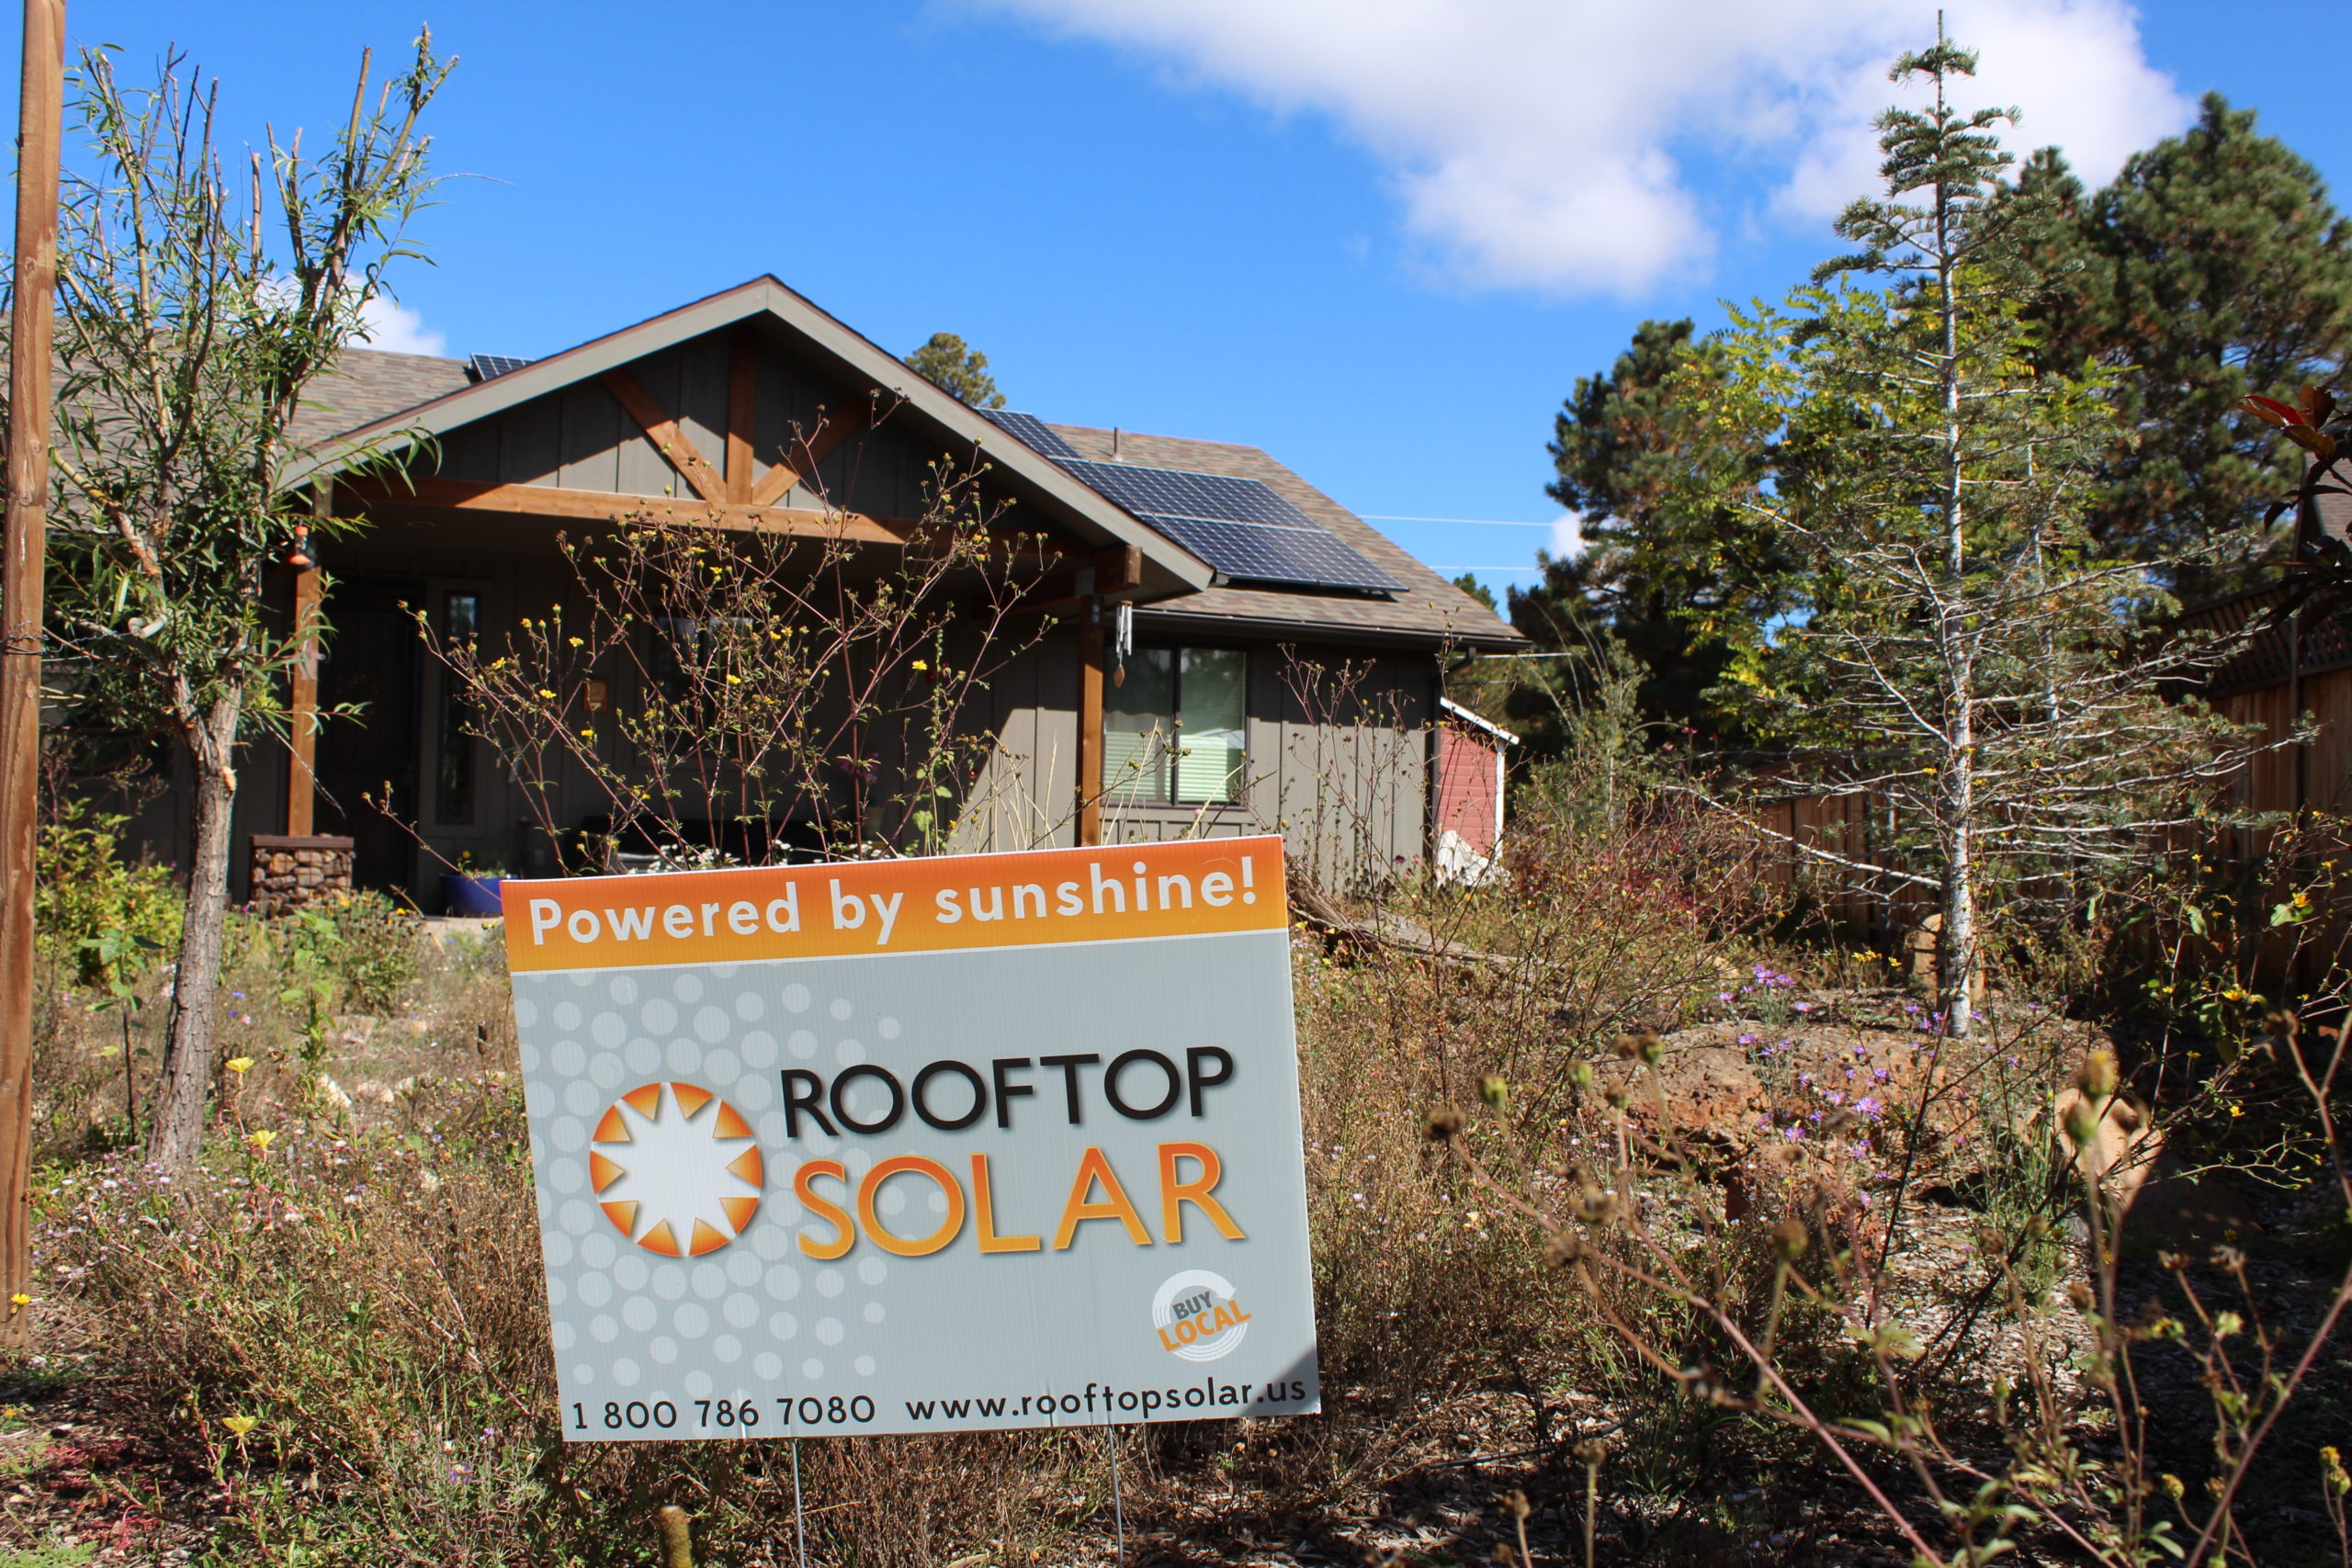 Rooftop Solar sign in front of Ziegler solar install.